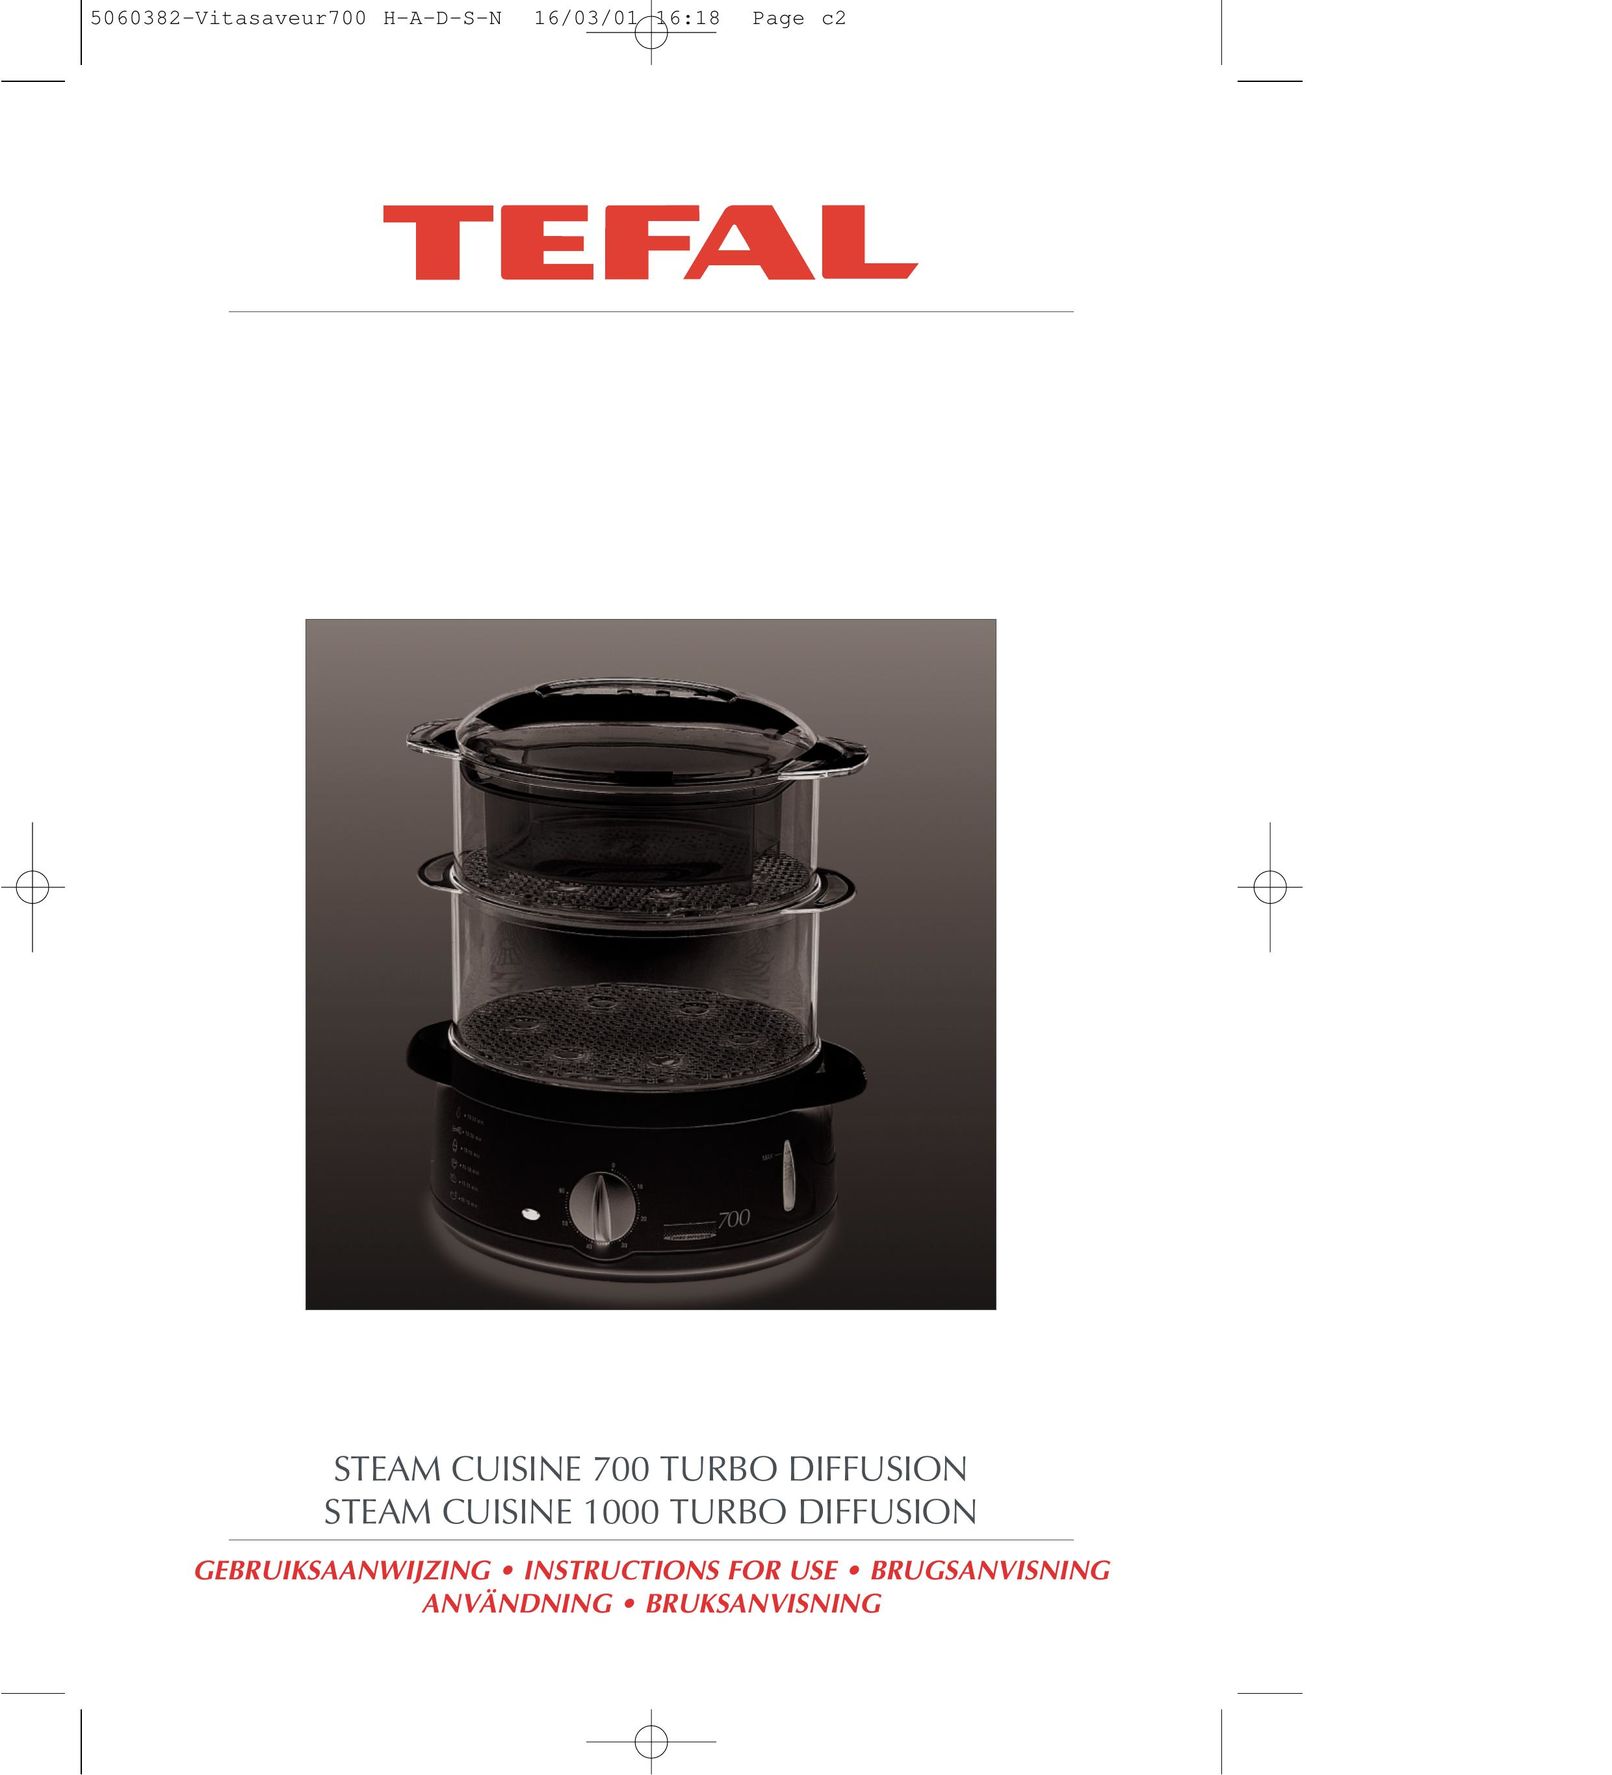 Groupe SEB USA - T-FAL 700 Electric Steamer User Manual